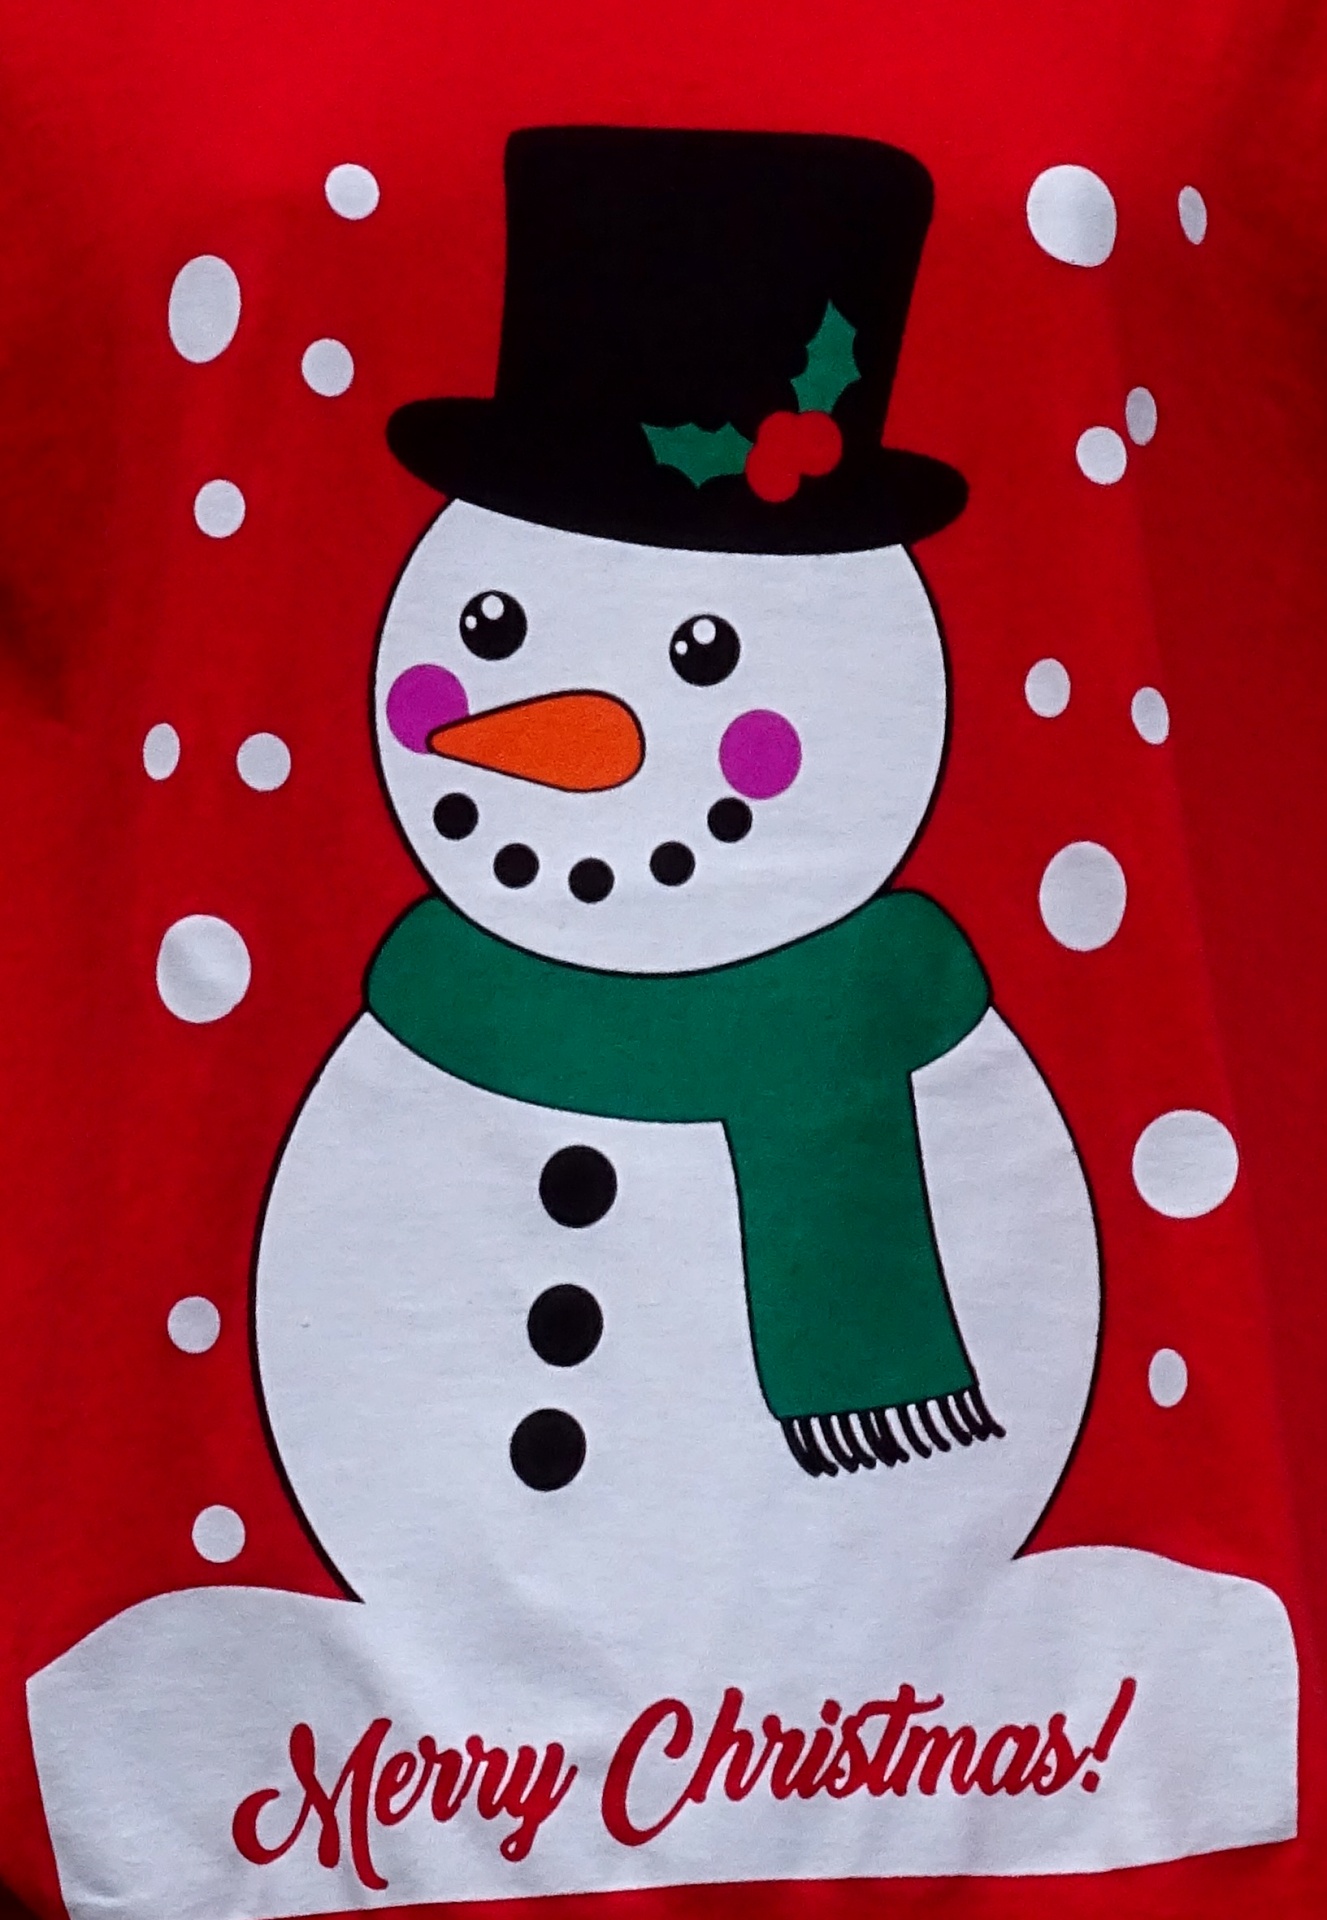 Merry Christmas Snowman Design Free Stock Photo - Public Domain Pictures